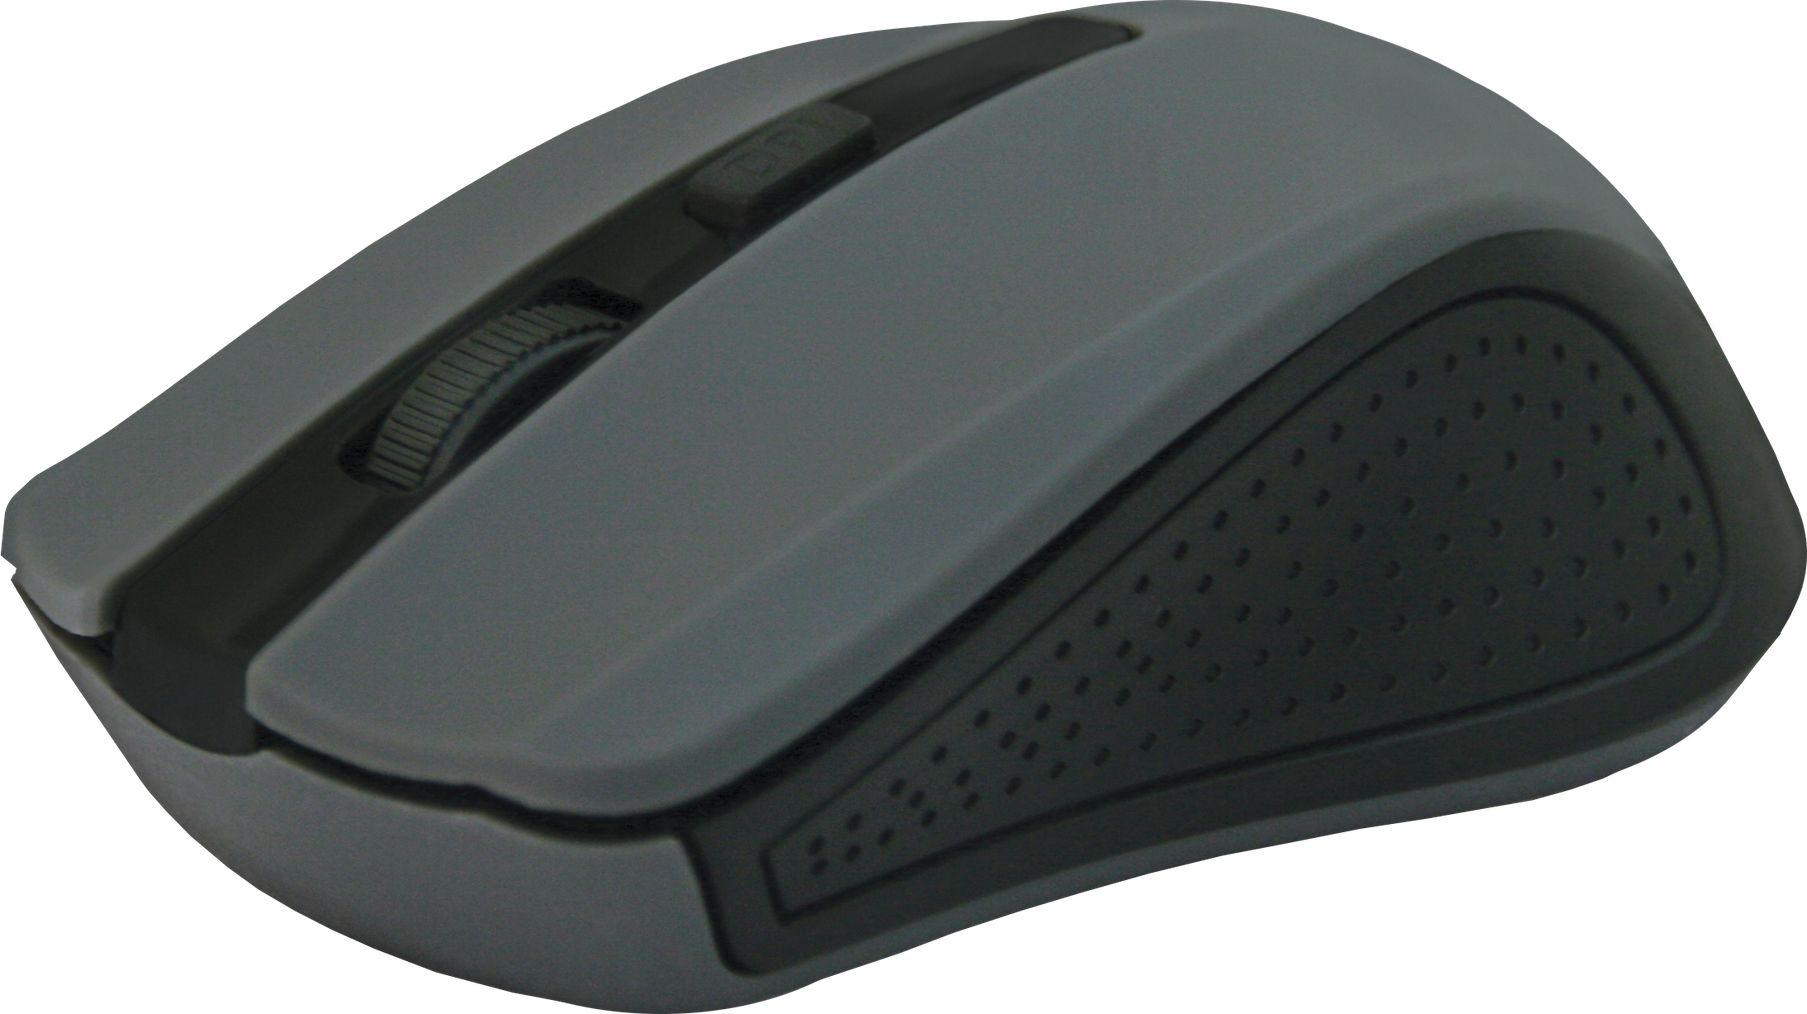 Defender MM-935 mouse RF Wireless Optical 1600 DPI Ambidextrous